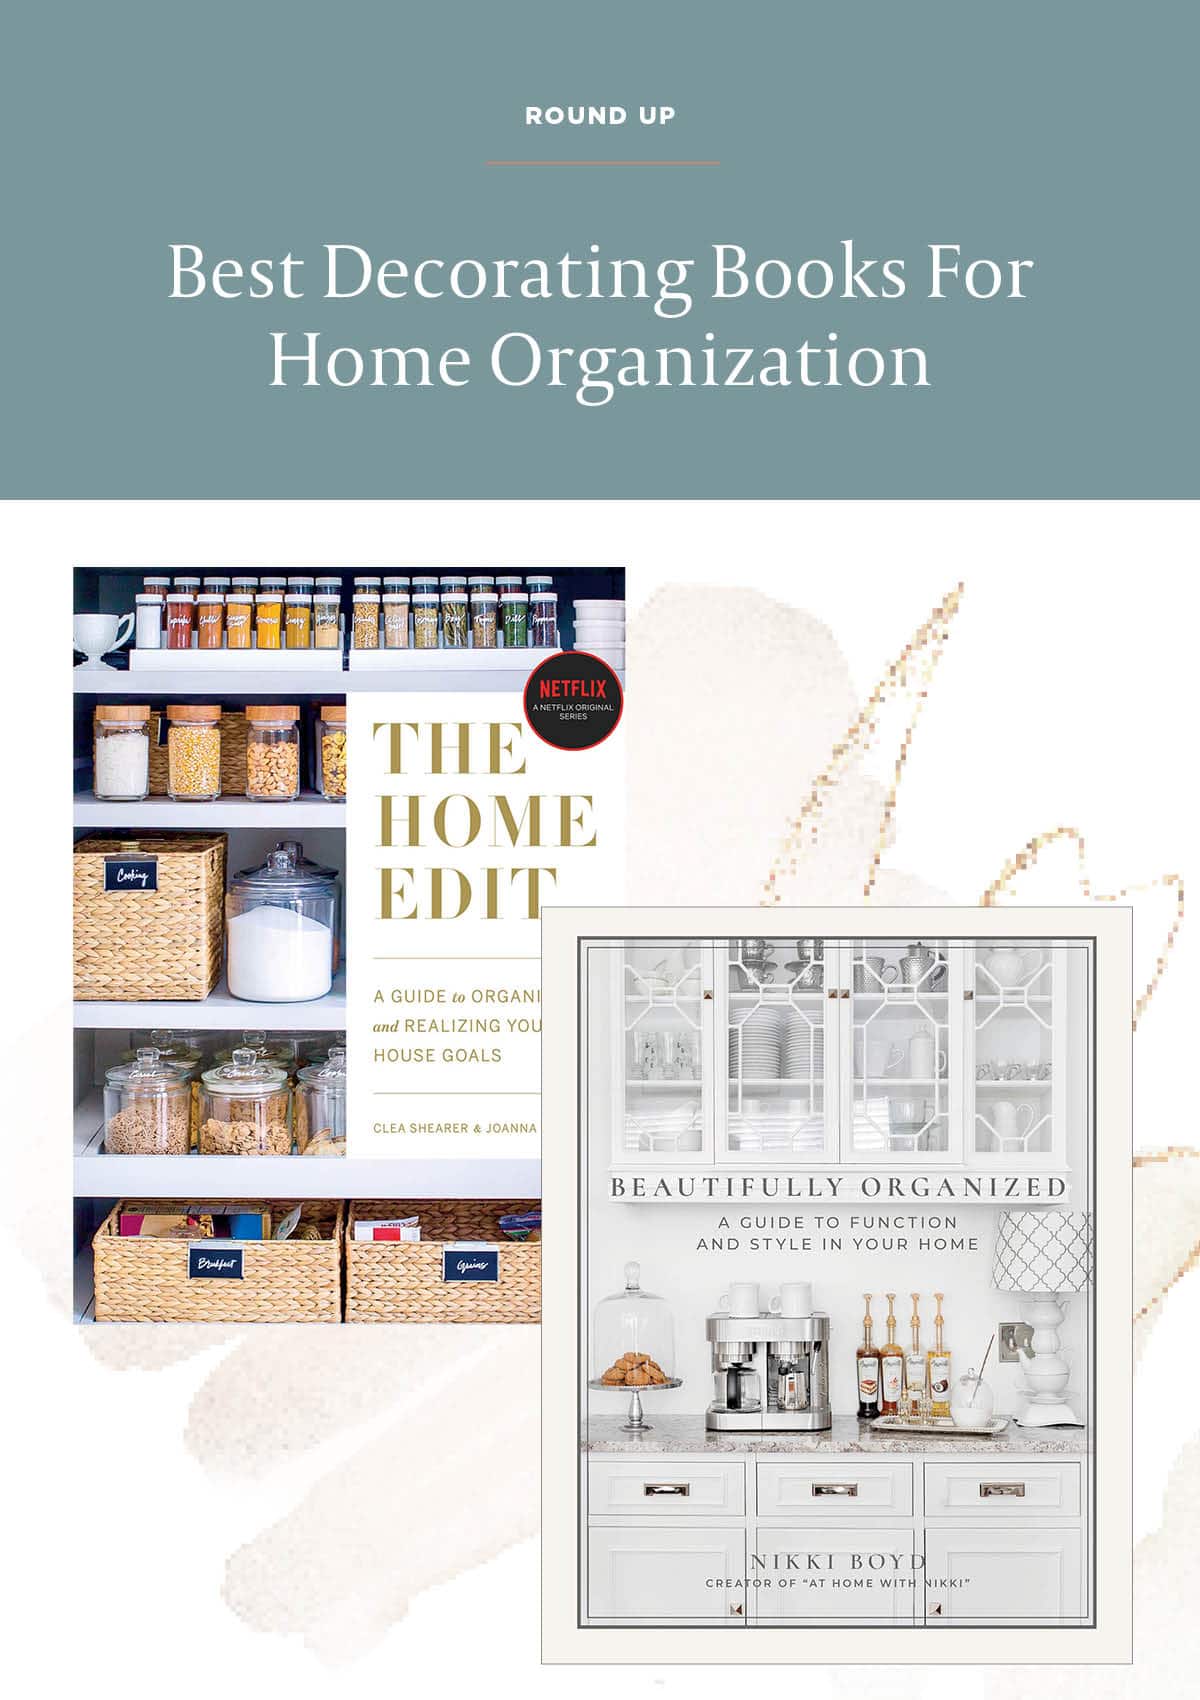 5 Essential Home Decorating Books